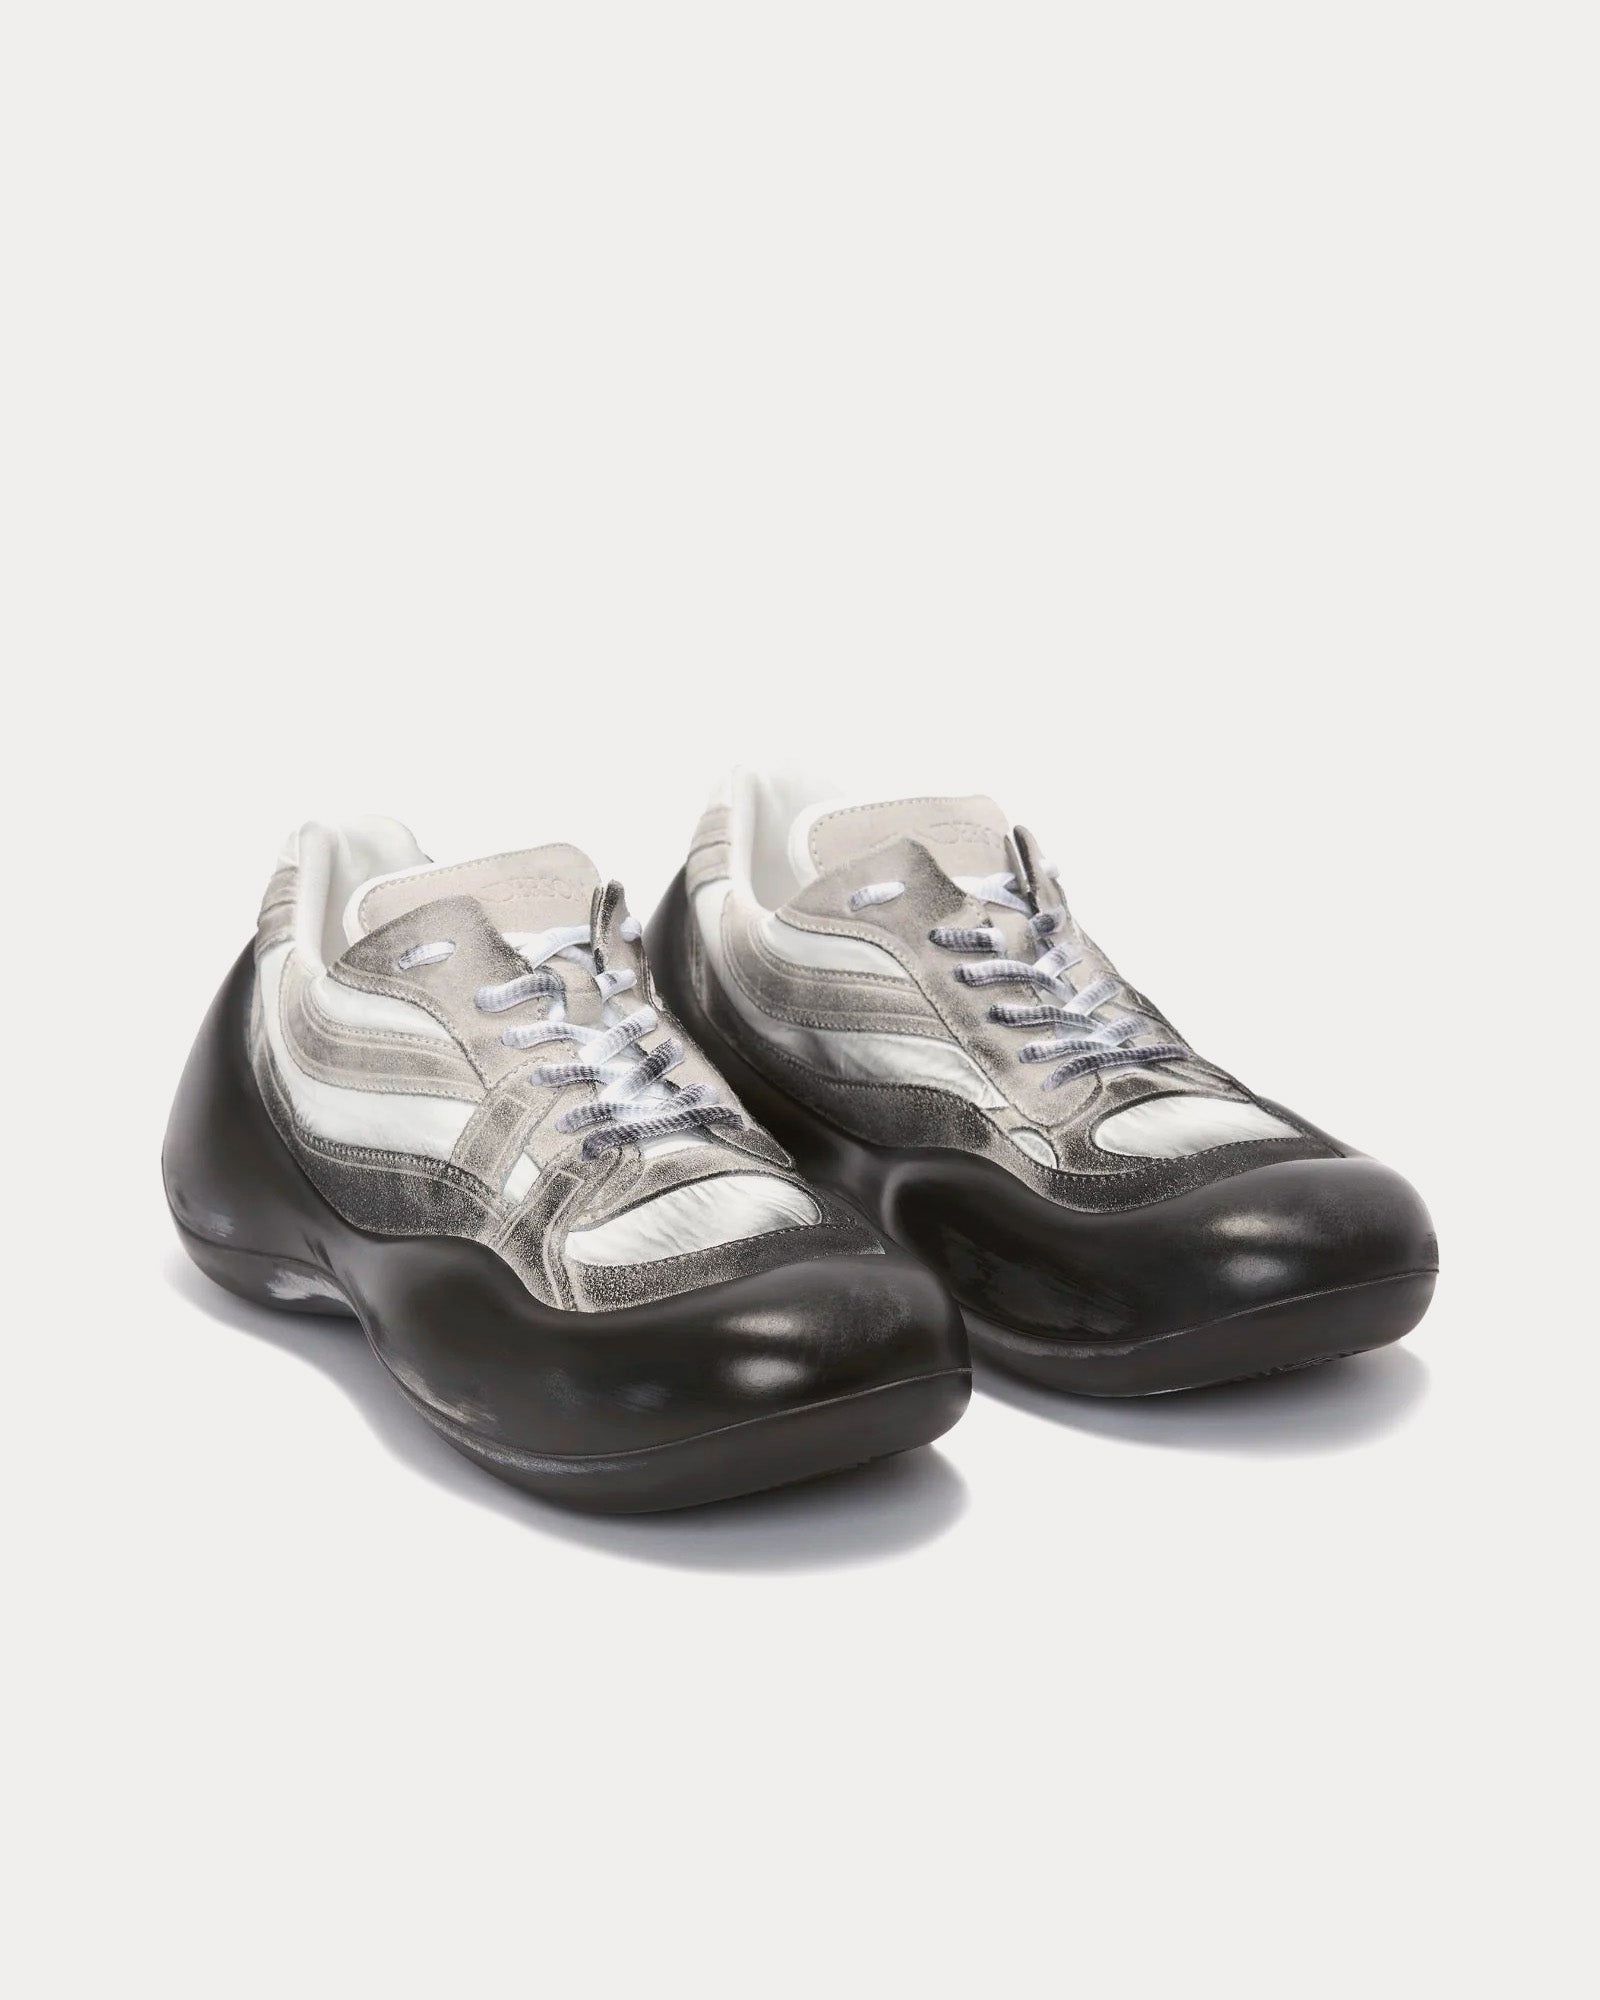 JW Anderson - Bumper-Hike Distressed Black / Light Grey Low Top Sneakers